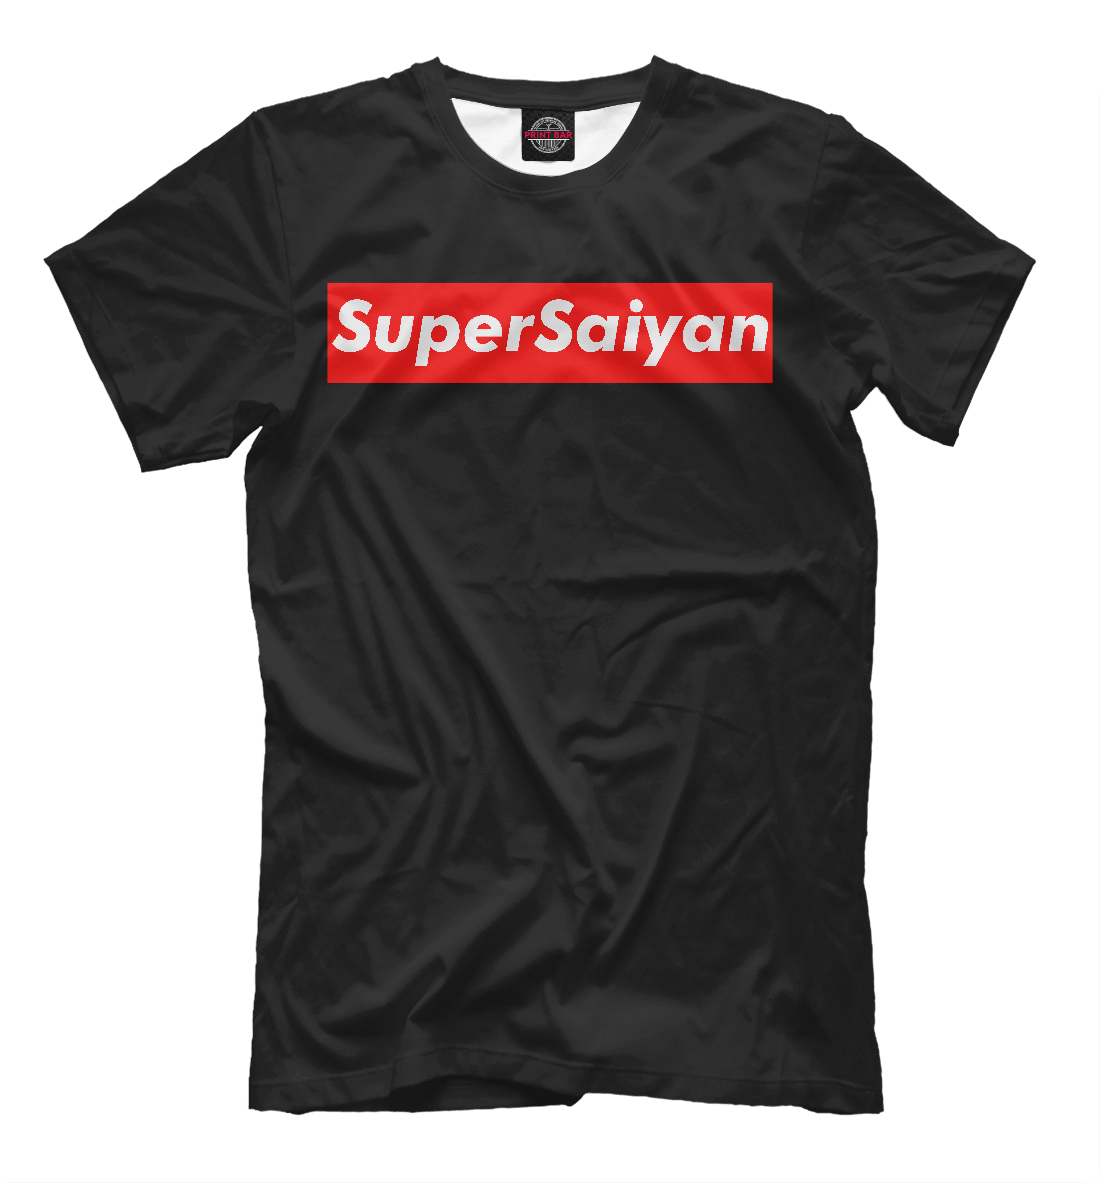 Футболка Super Saiyan для мужчин, артикул: ANR-769279-fut-2mp